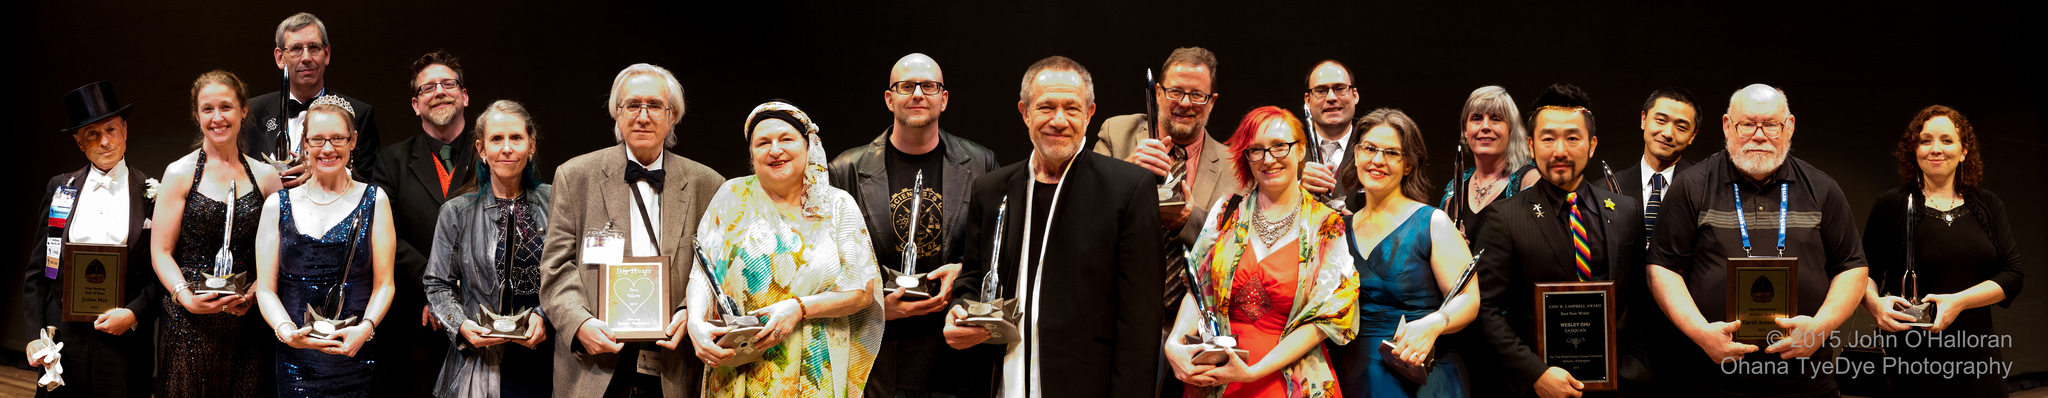 2015 Hugo Award Winners and Acceptors, photo [John O’Halloran](https://www.flickr.com/photos/johno/20640748340/), CC BY-NC-SA 2.0